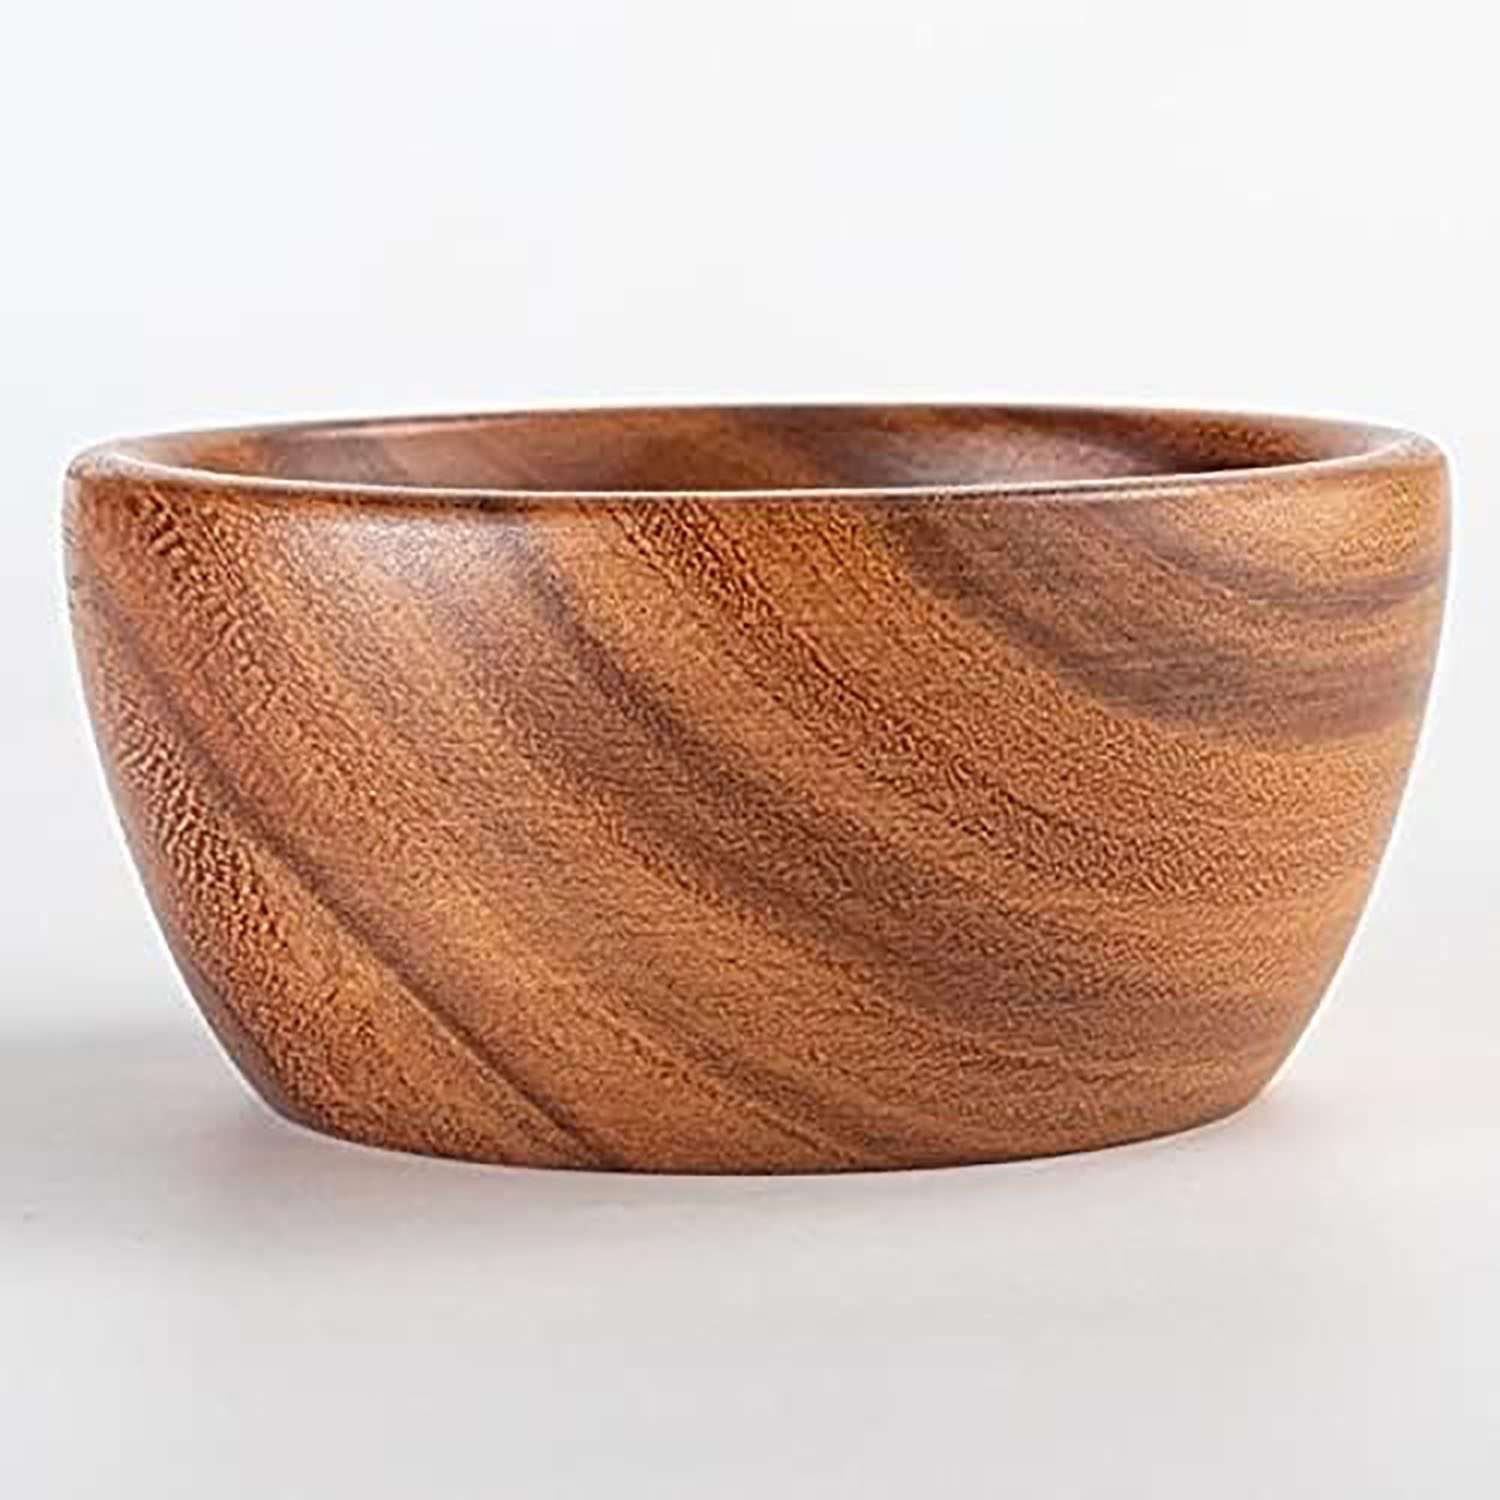 Acacia Wooden Salad Bowls (Set of 2)| Individual Wood Serving Bowls for Fruits, Cereal, or Soup